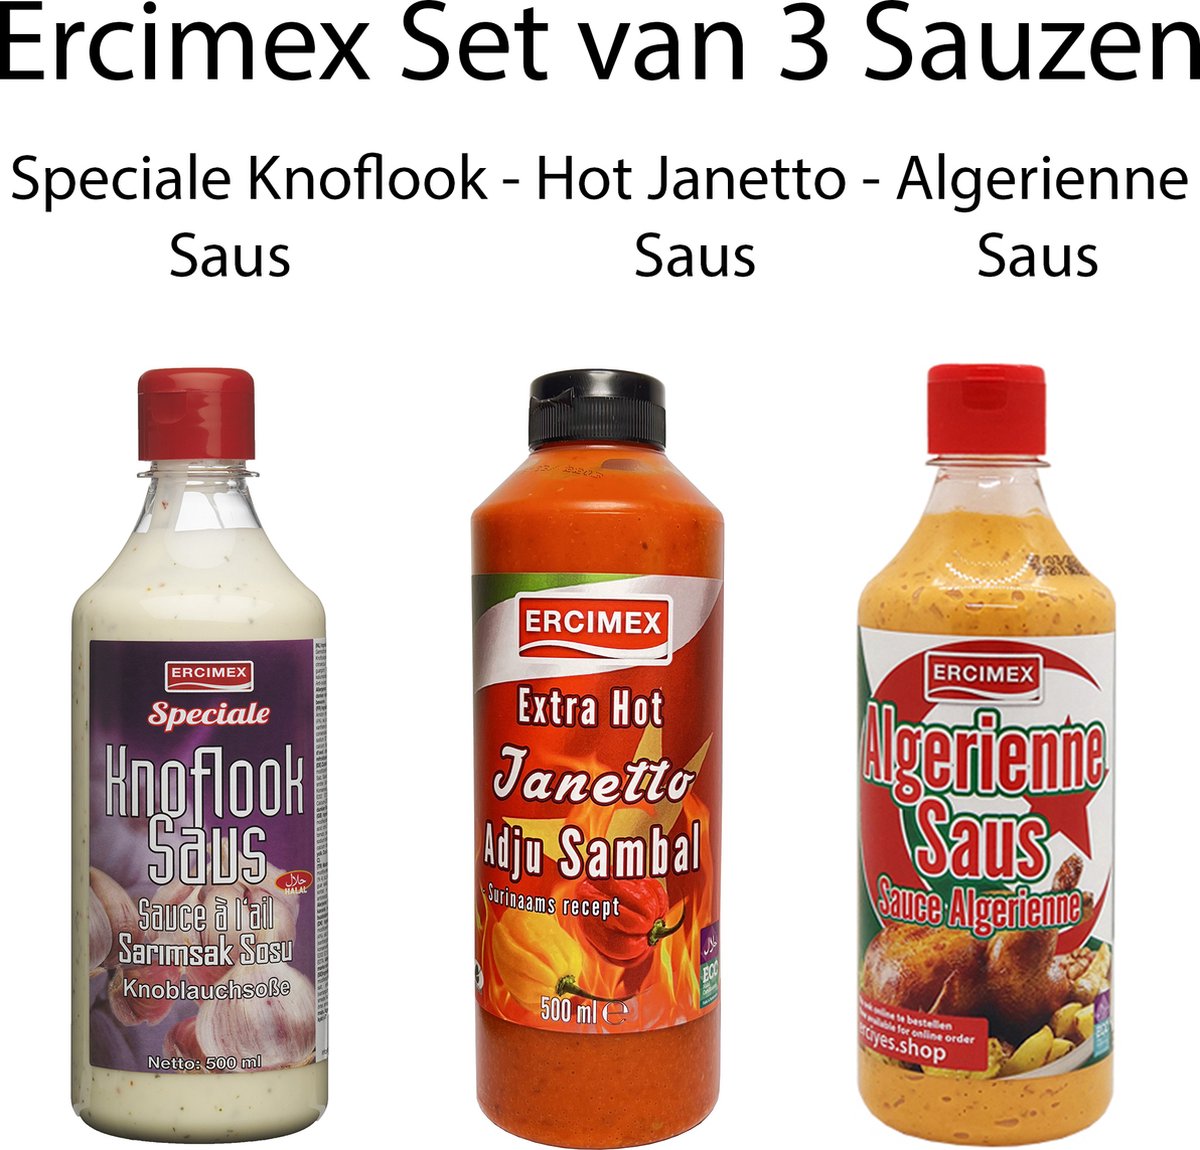 Ercimex Set van 3 Sauzen - Speciale Knoflook Saus, Extra Hot